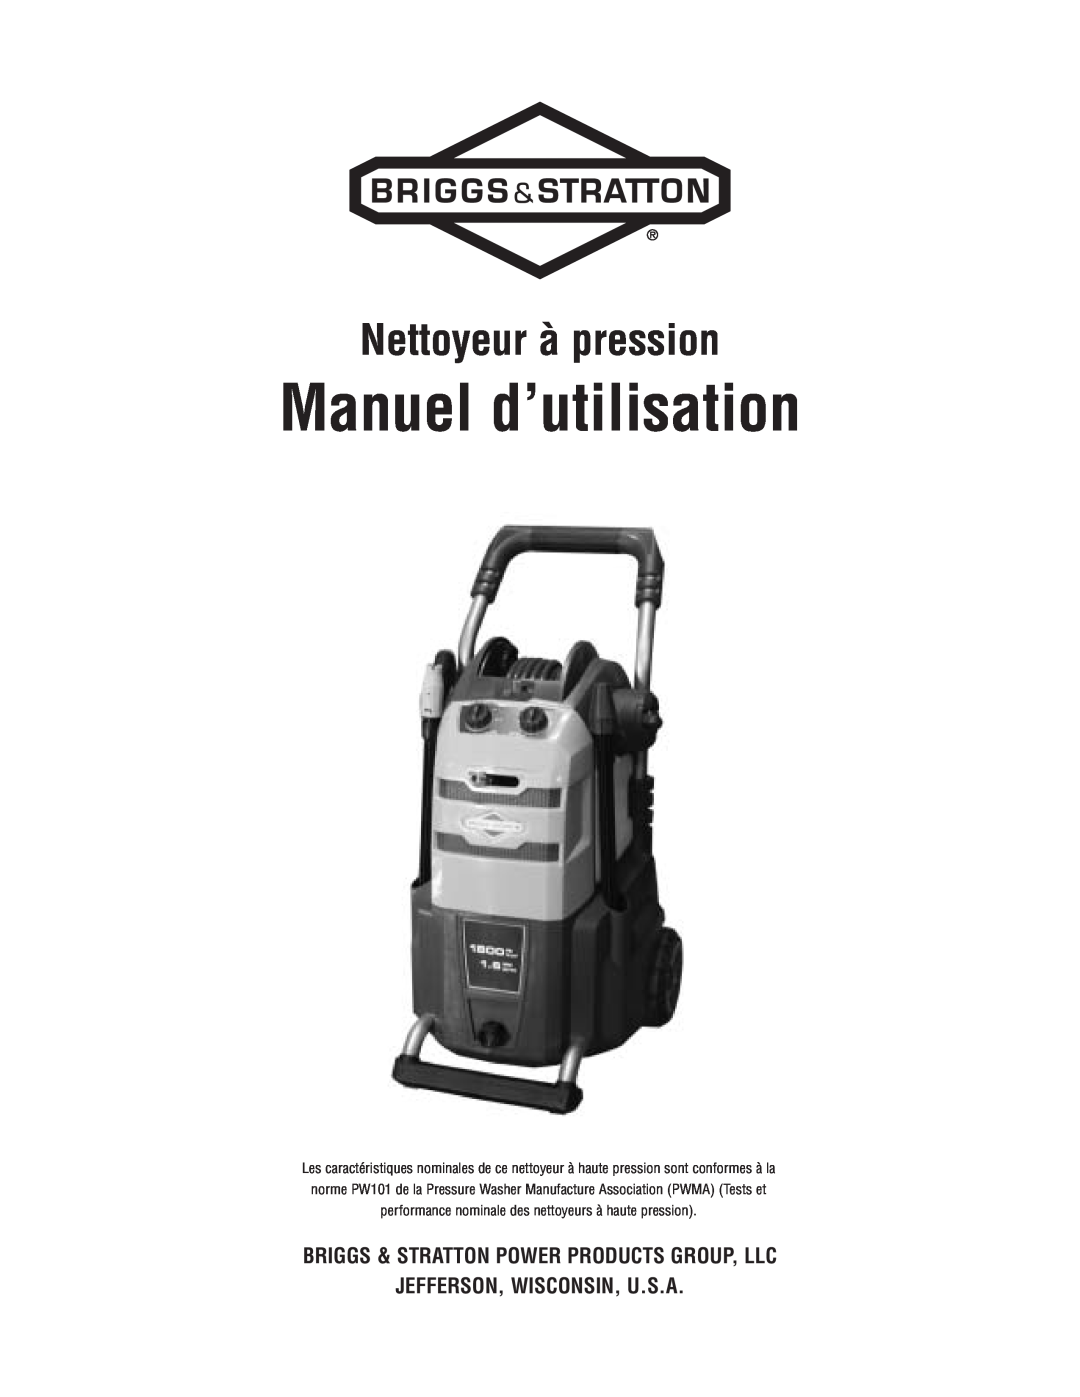 Briggs & Stratton Electric Pressure Washer manual Manuel d’utilisation, Nettoyeur à pression, Jefferson, Wisconsin, U.S.A 